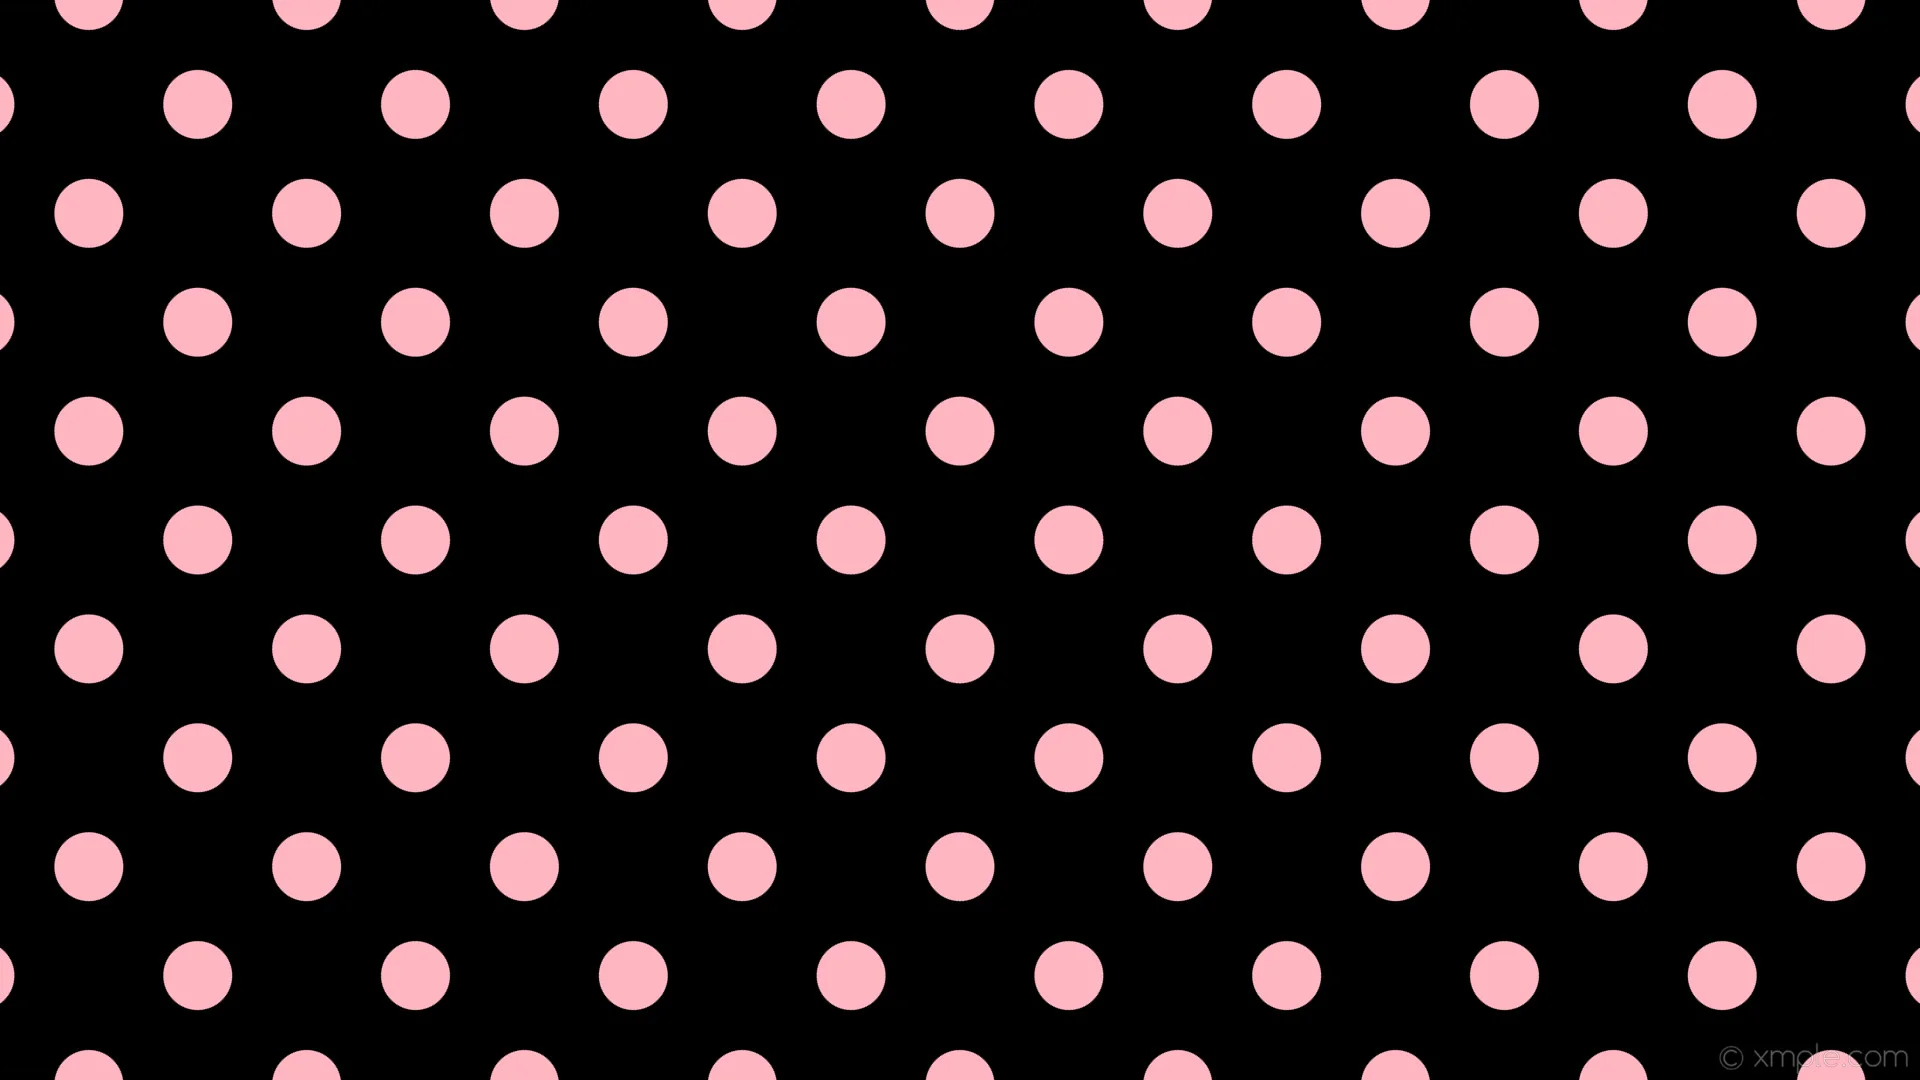 Wallpaper spots black pink polka dots light pink #ffb6c1 45 69px 154px